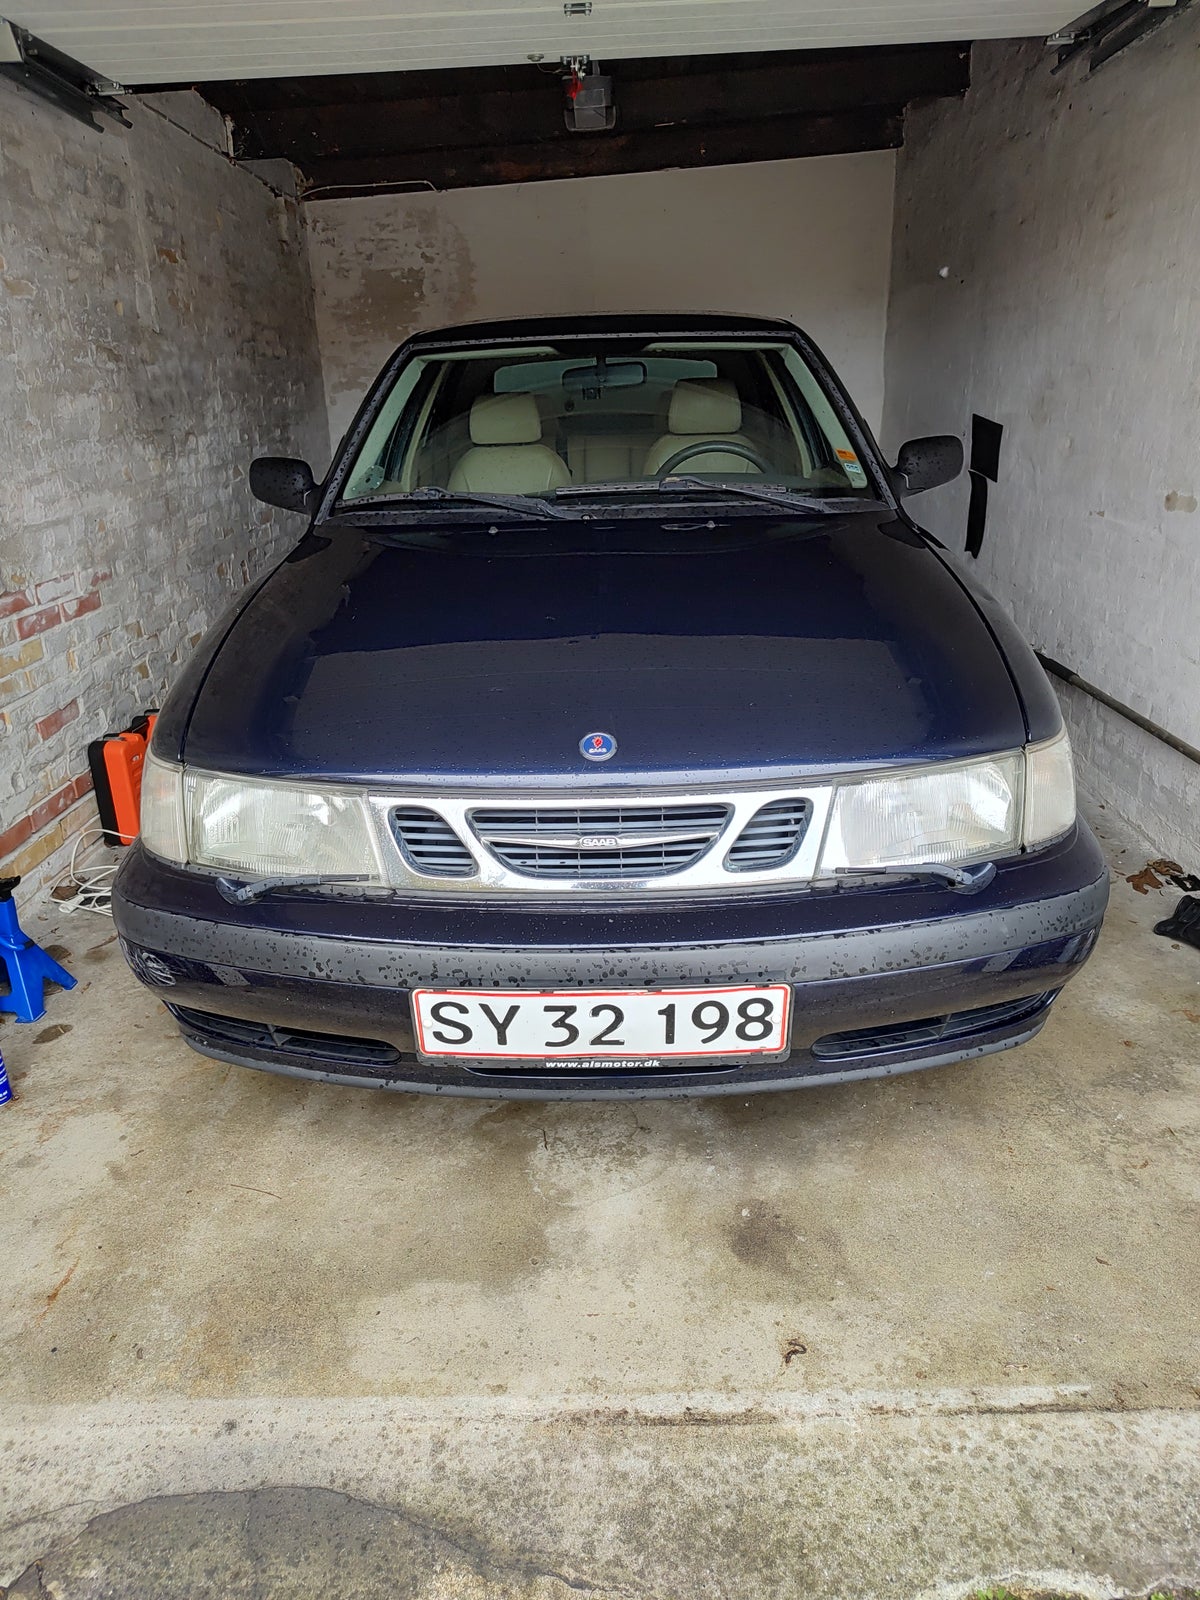 Saab 9-3, 2,0 Turbo, Benzin